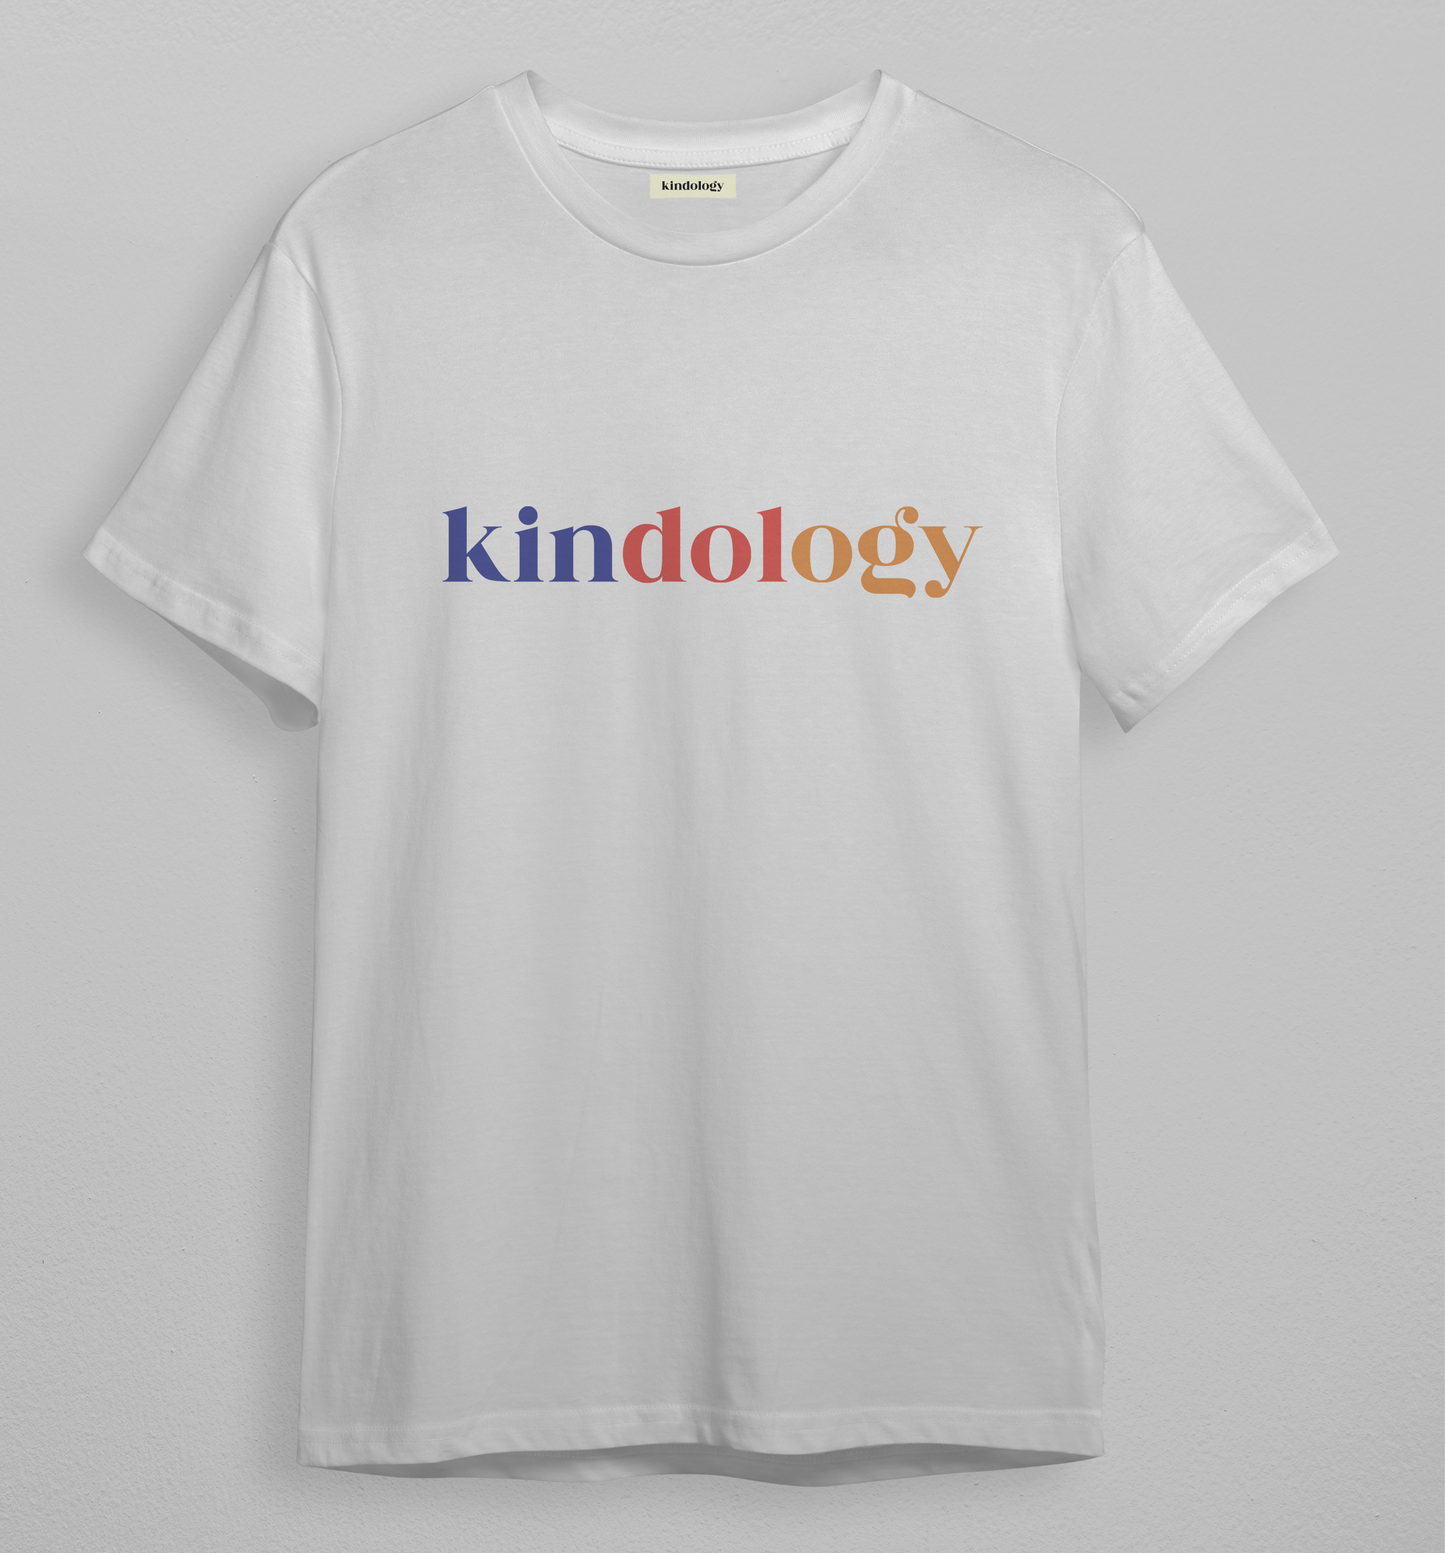 T-shirt Kindology Original Colors